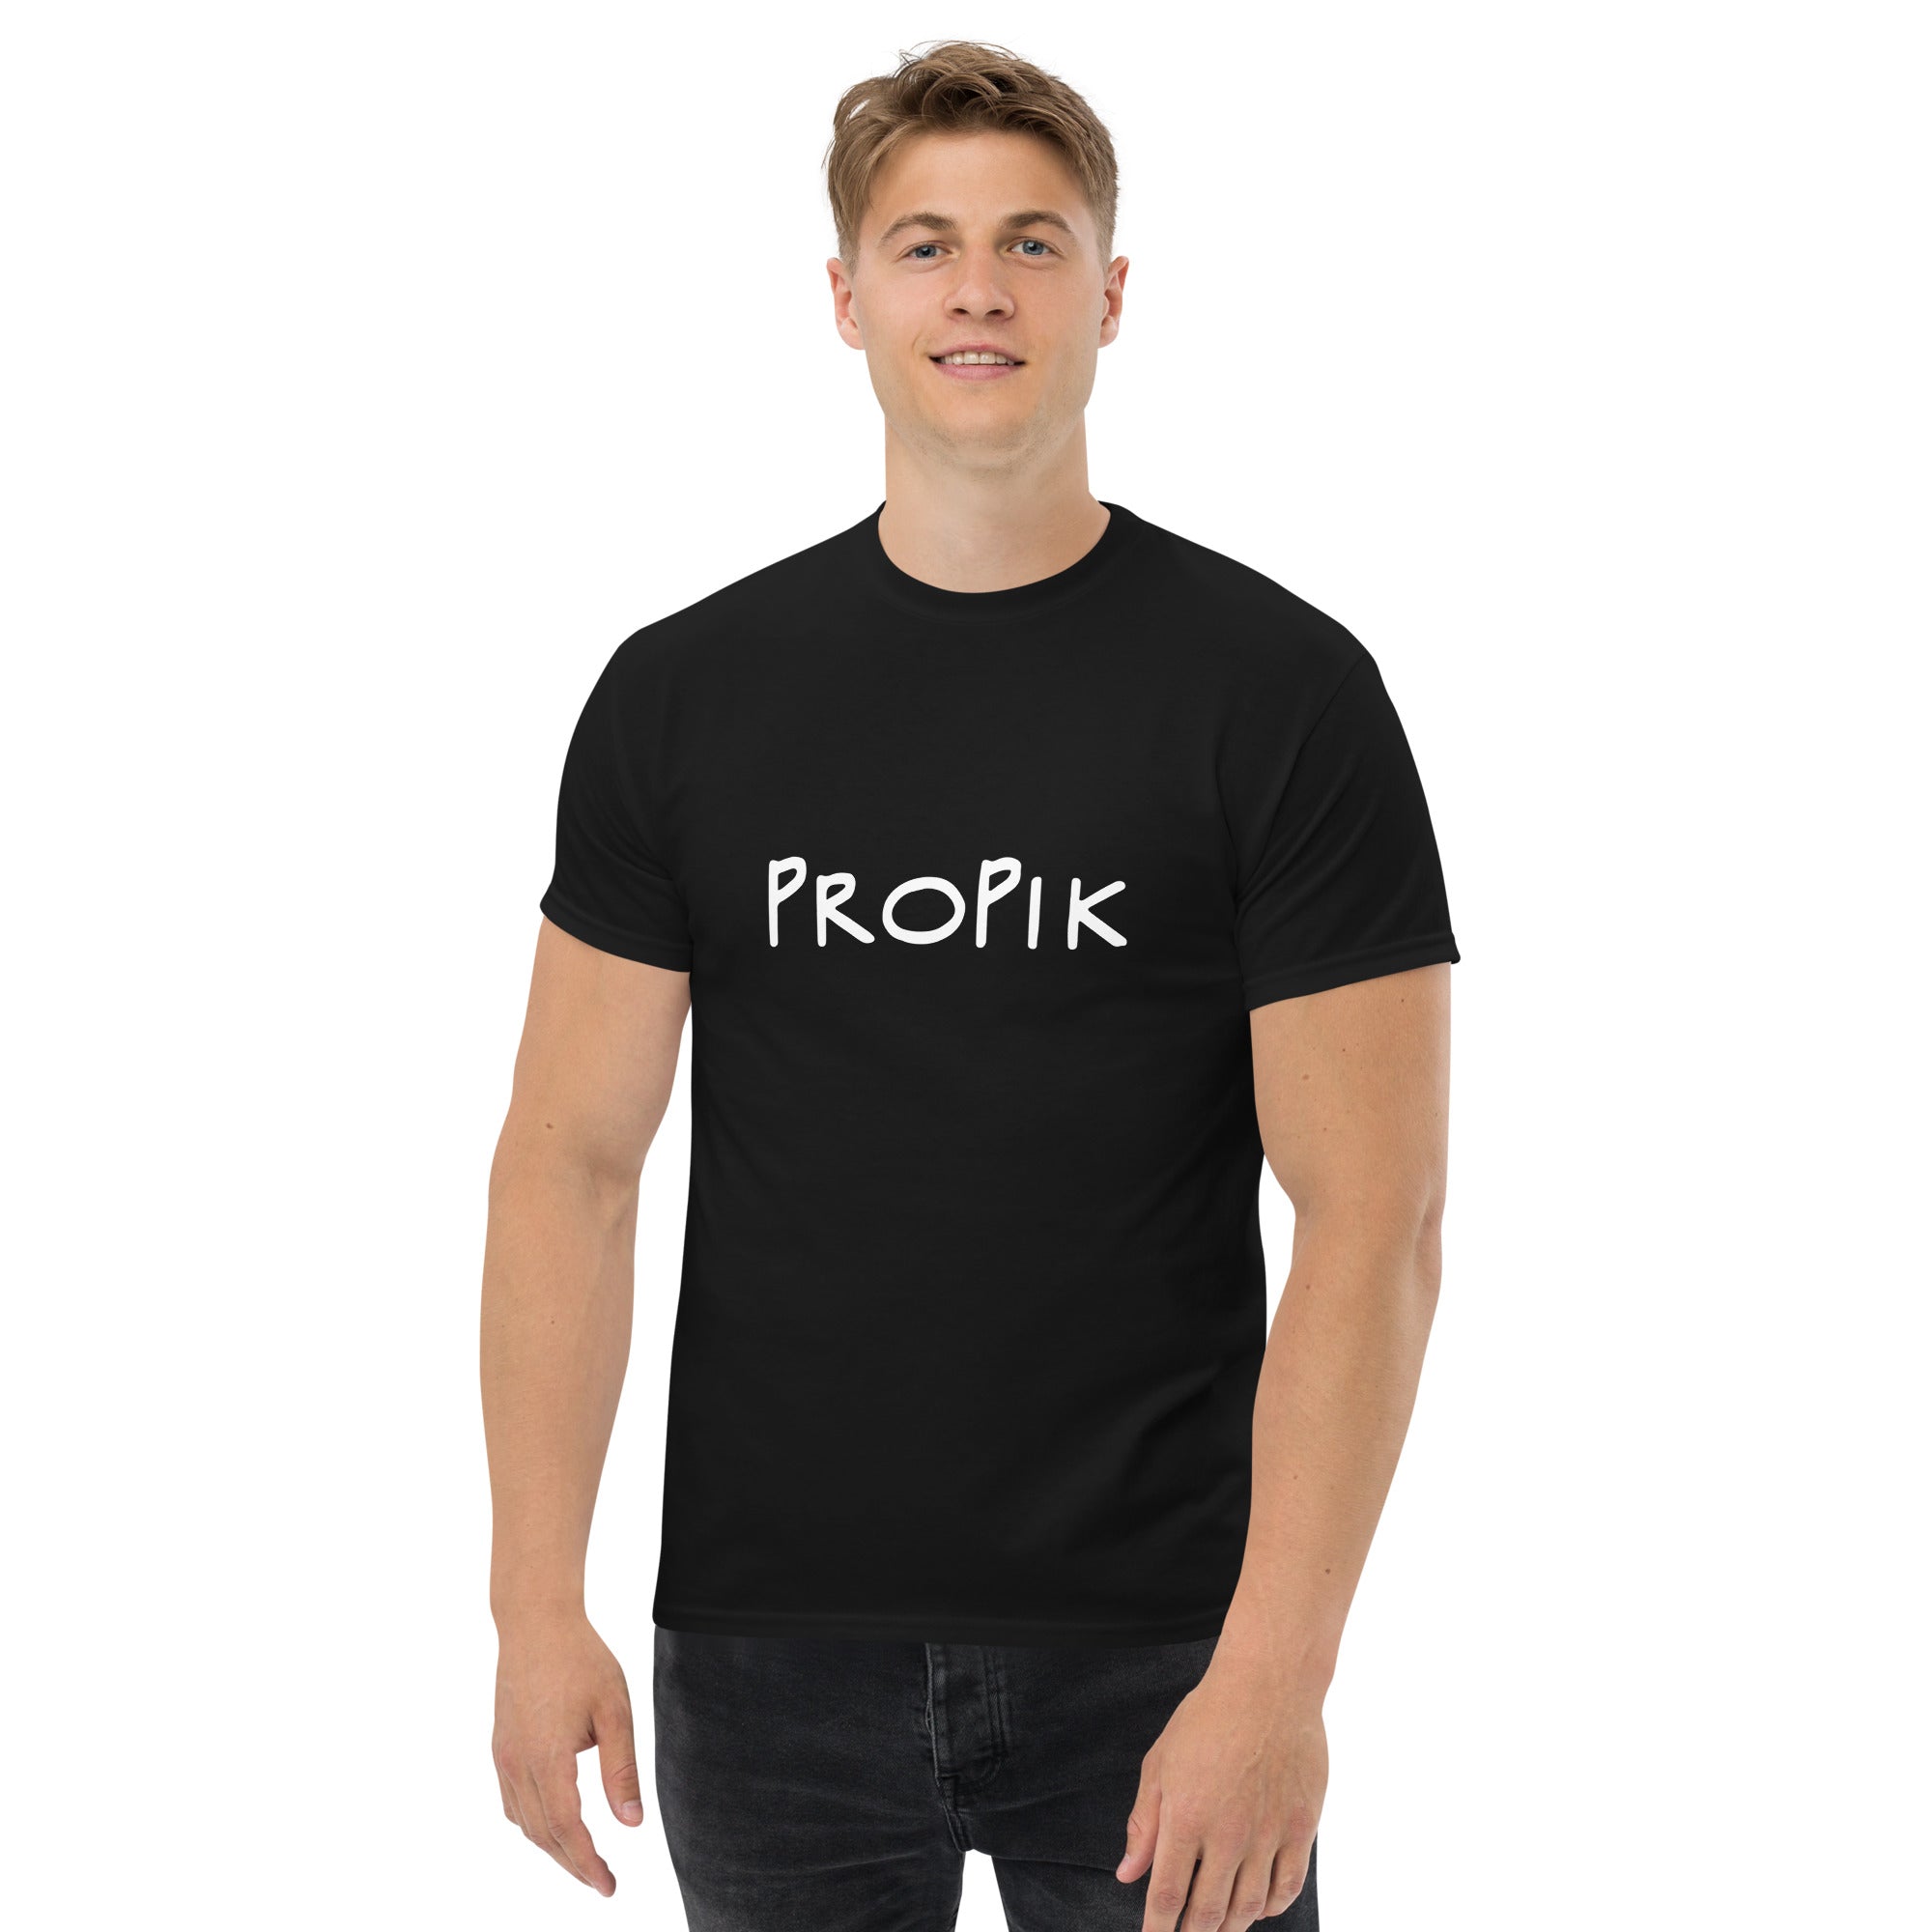 ProPik T-Shirt on guy with big arms